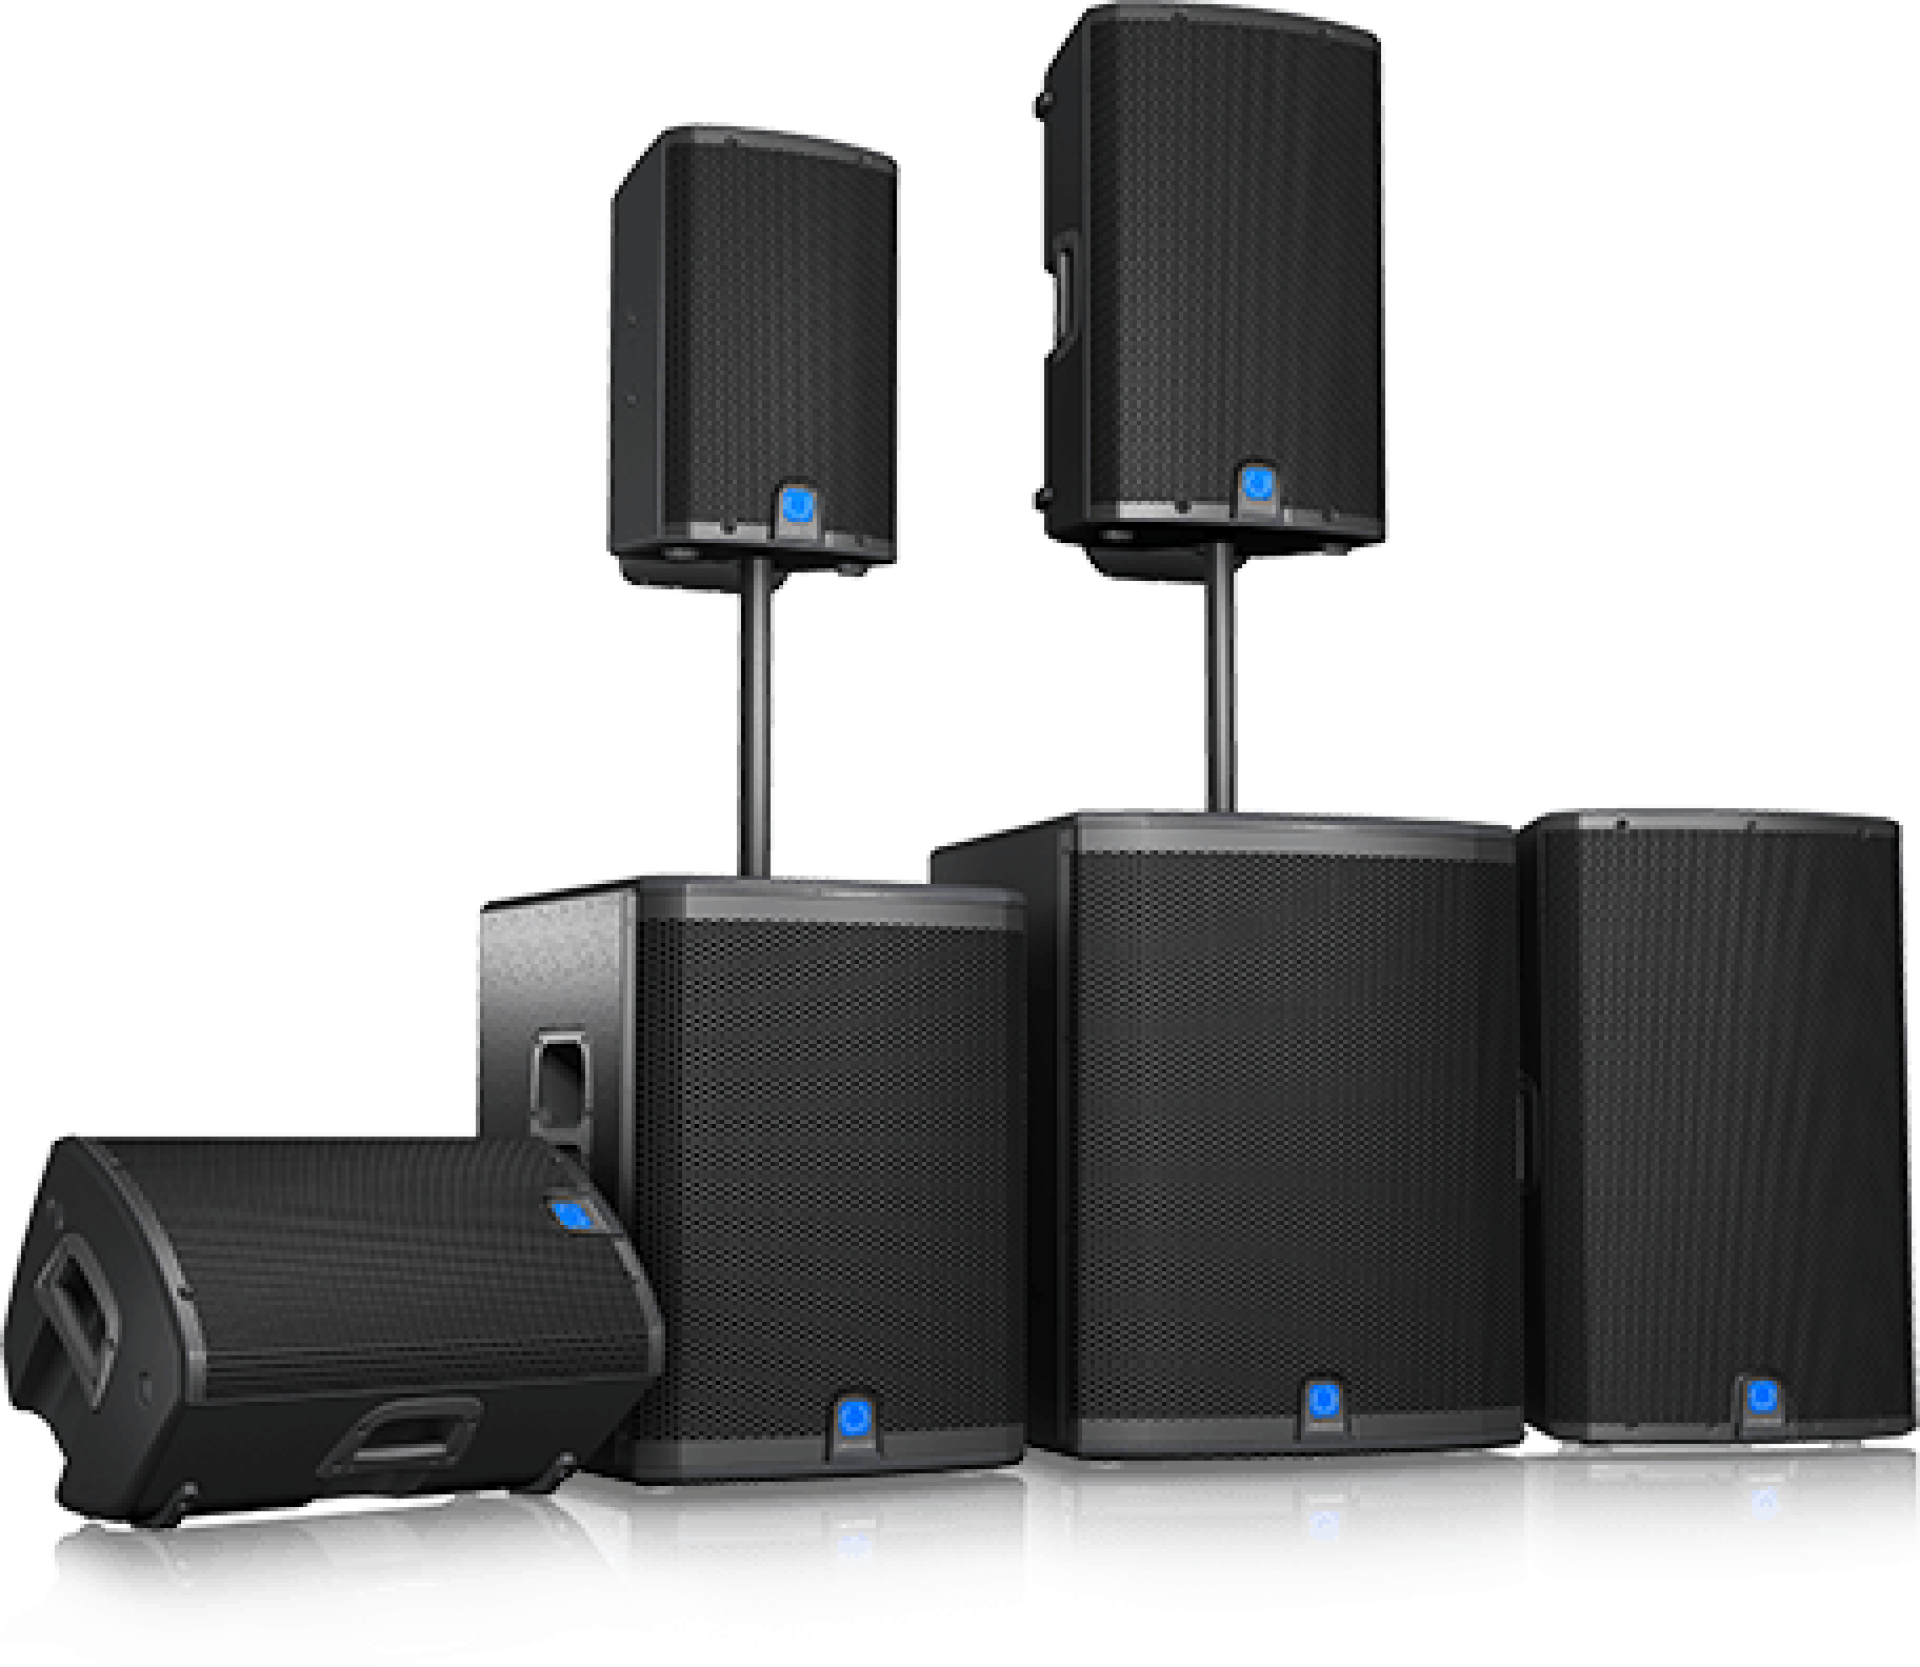 Turbosound IQ Series Speakers